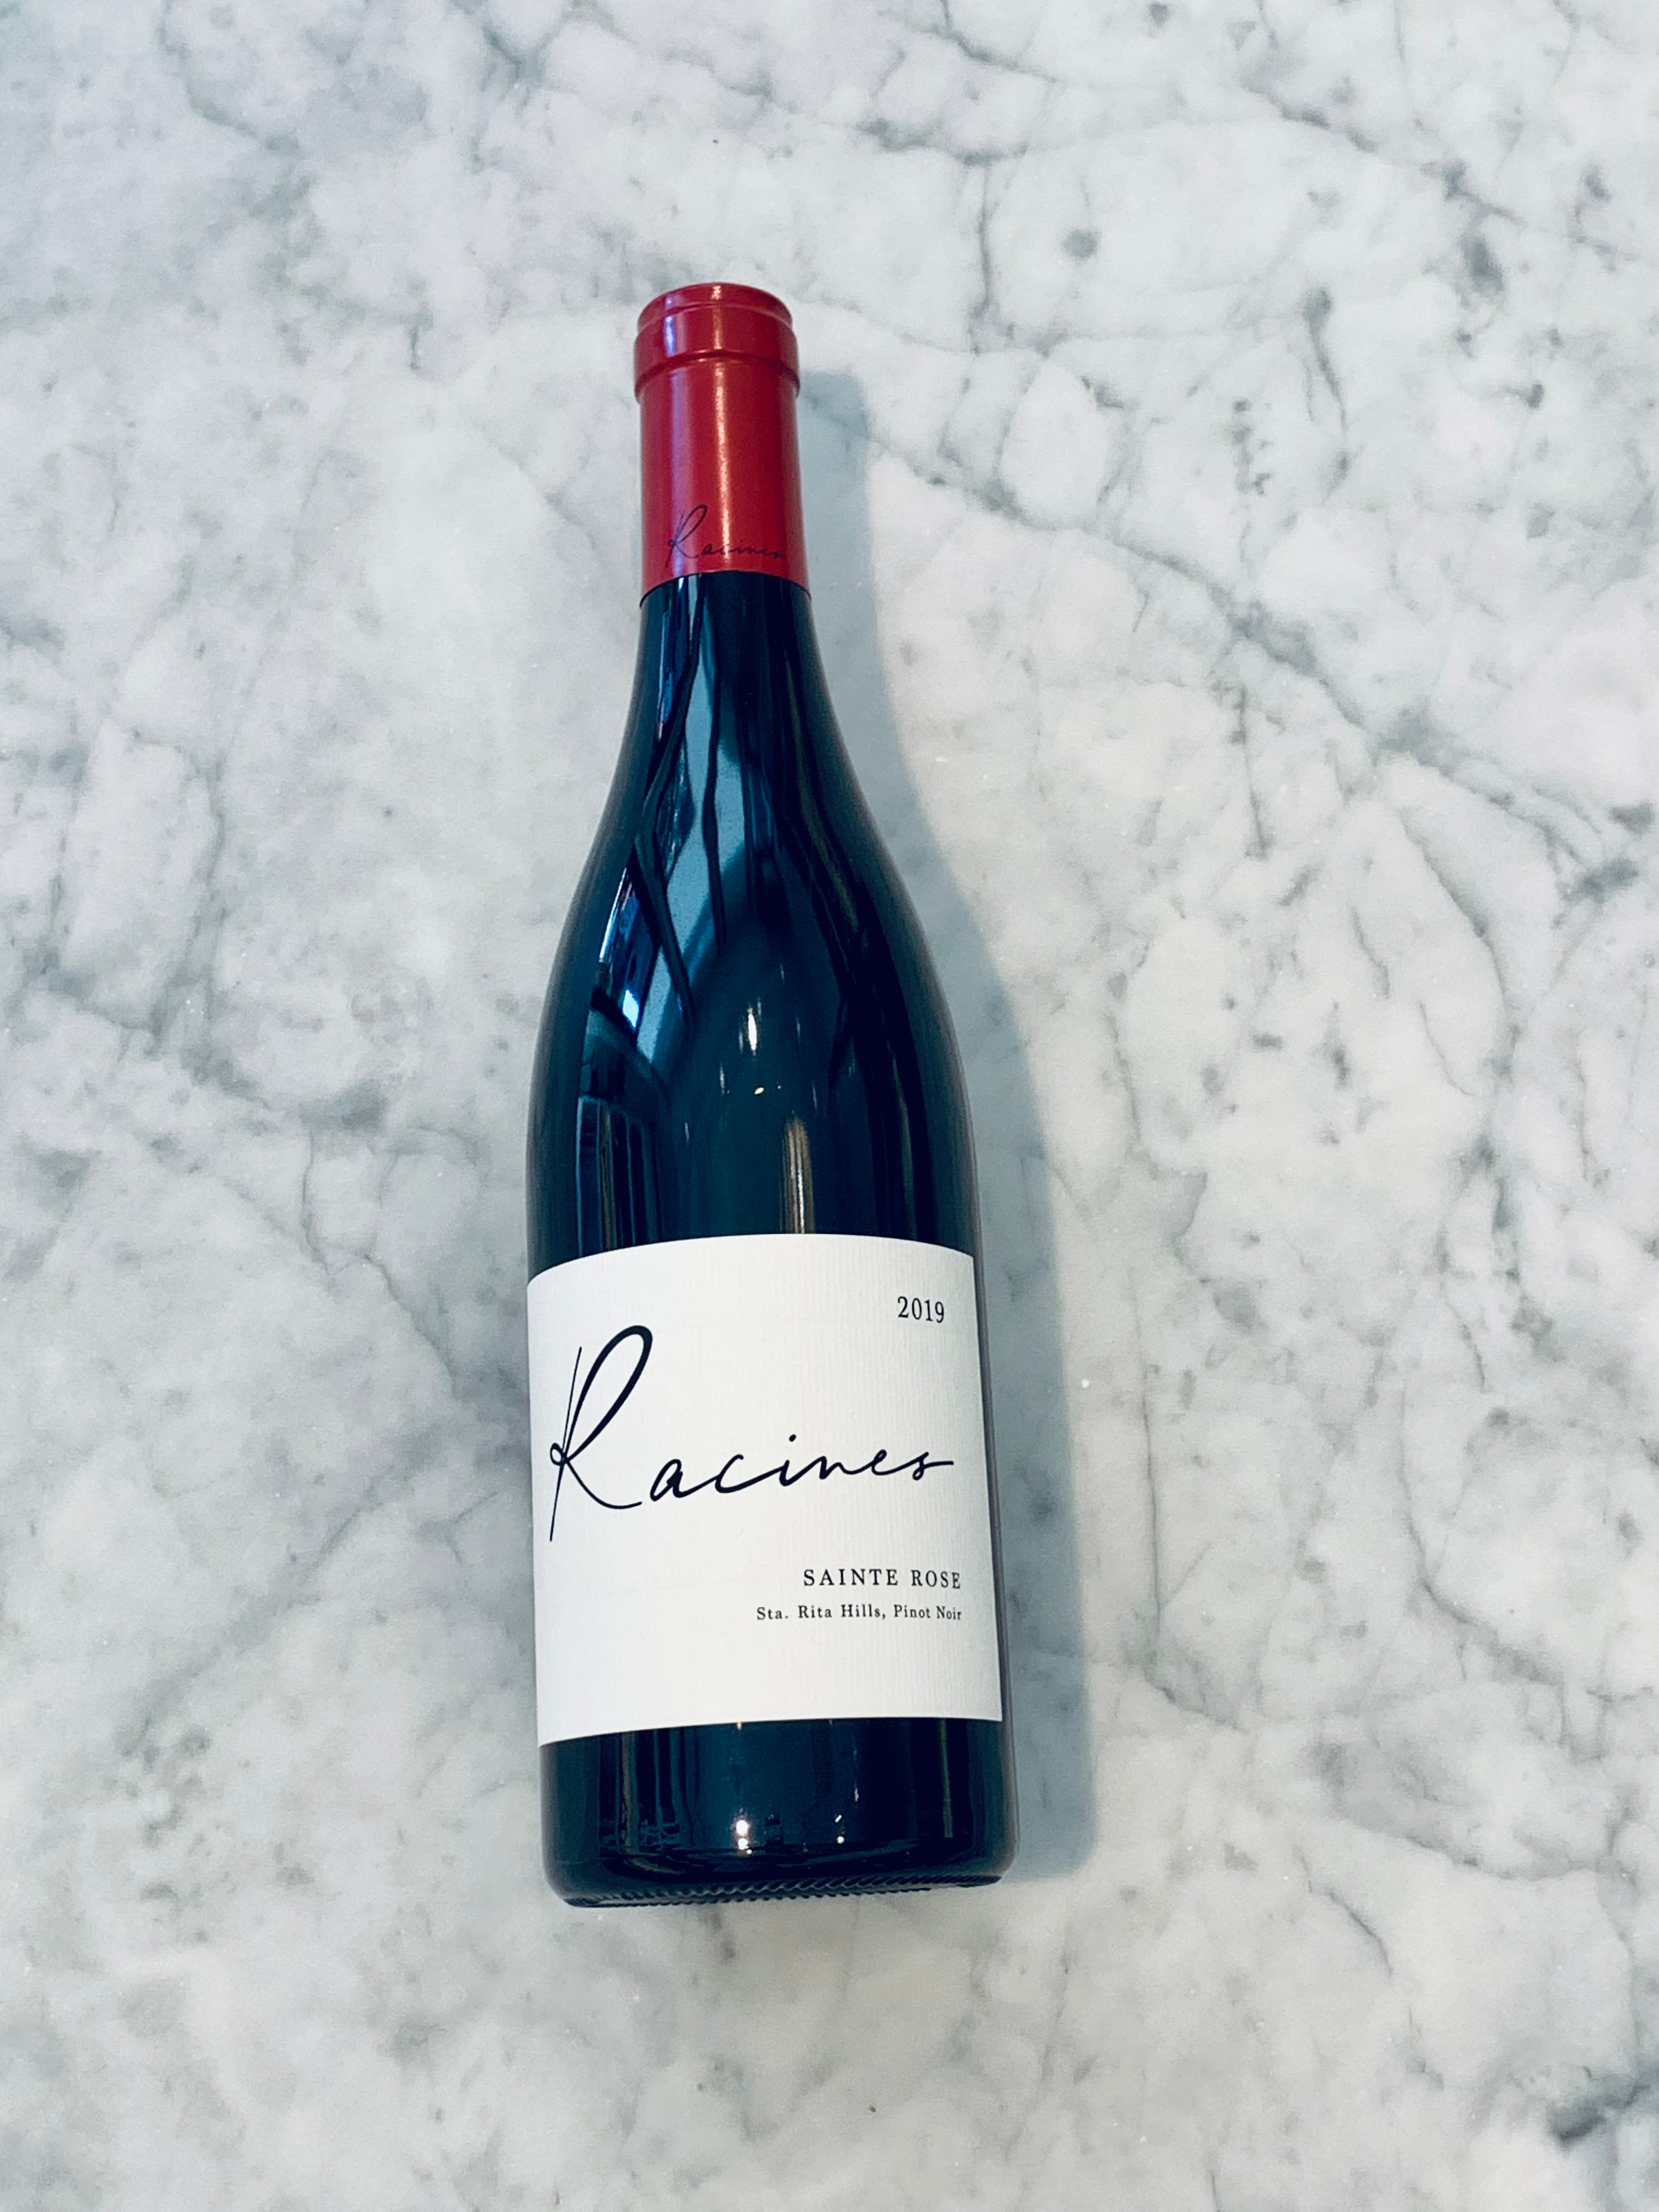 Racines Wine - Pinot Noir "SAINTE ROSE" Sta. Rita Hills 2019 750ml (12.9% ABV)